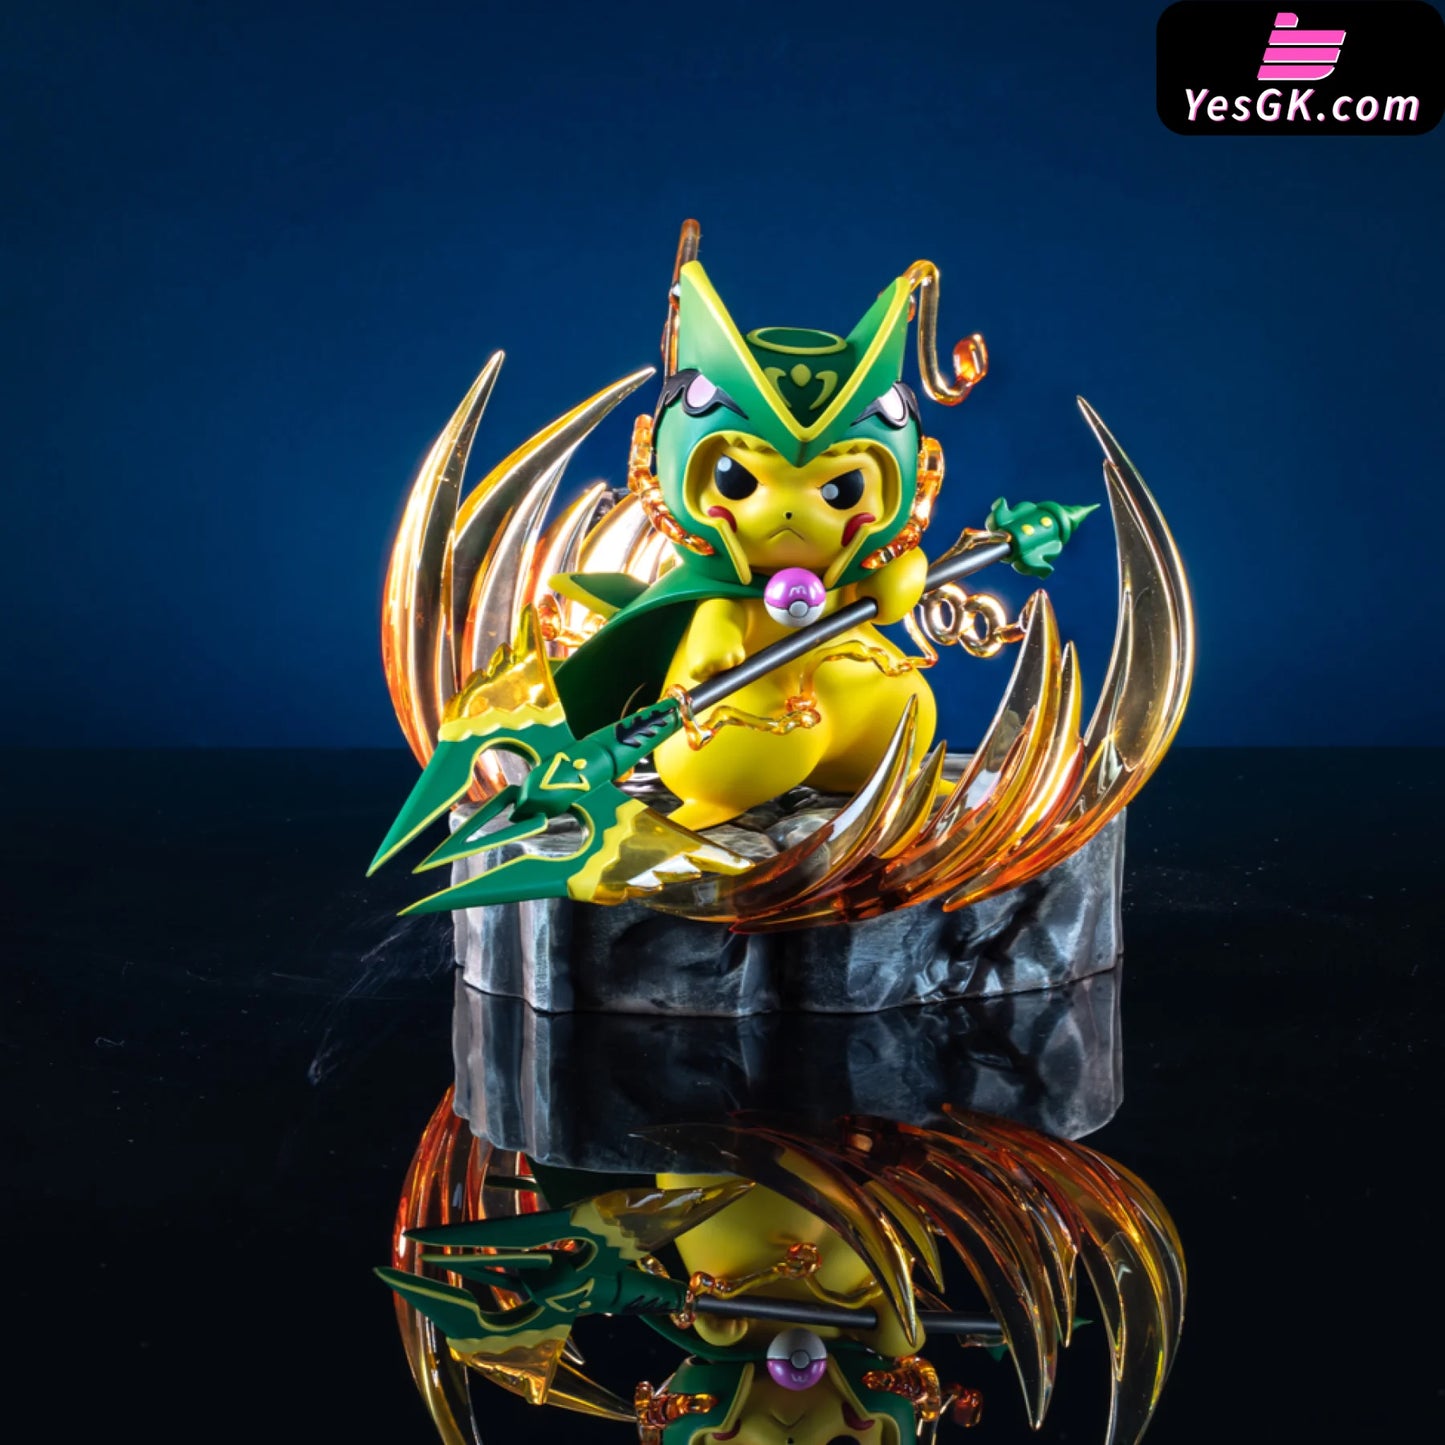 US$ 102.50 - 【In Stock】NEWBRA Studio Pokemon Thanos Pikachu Resin Statue 